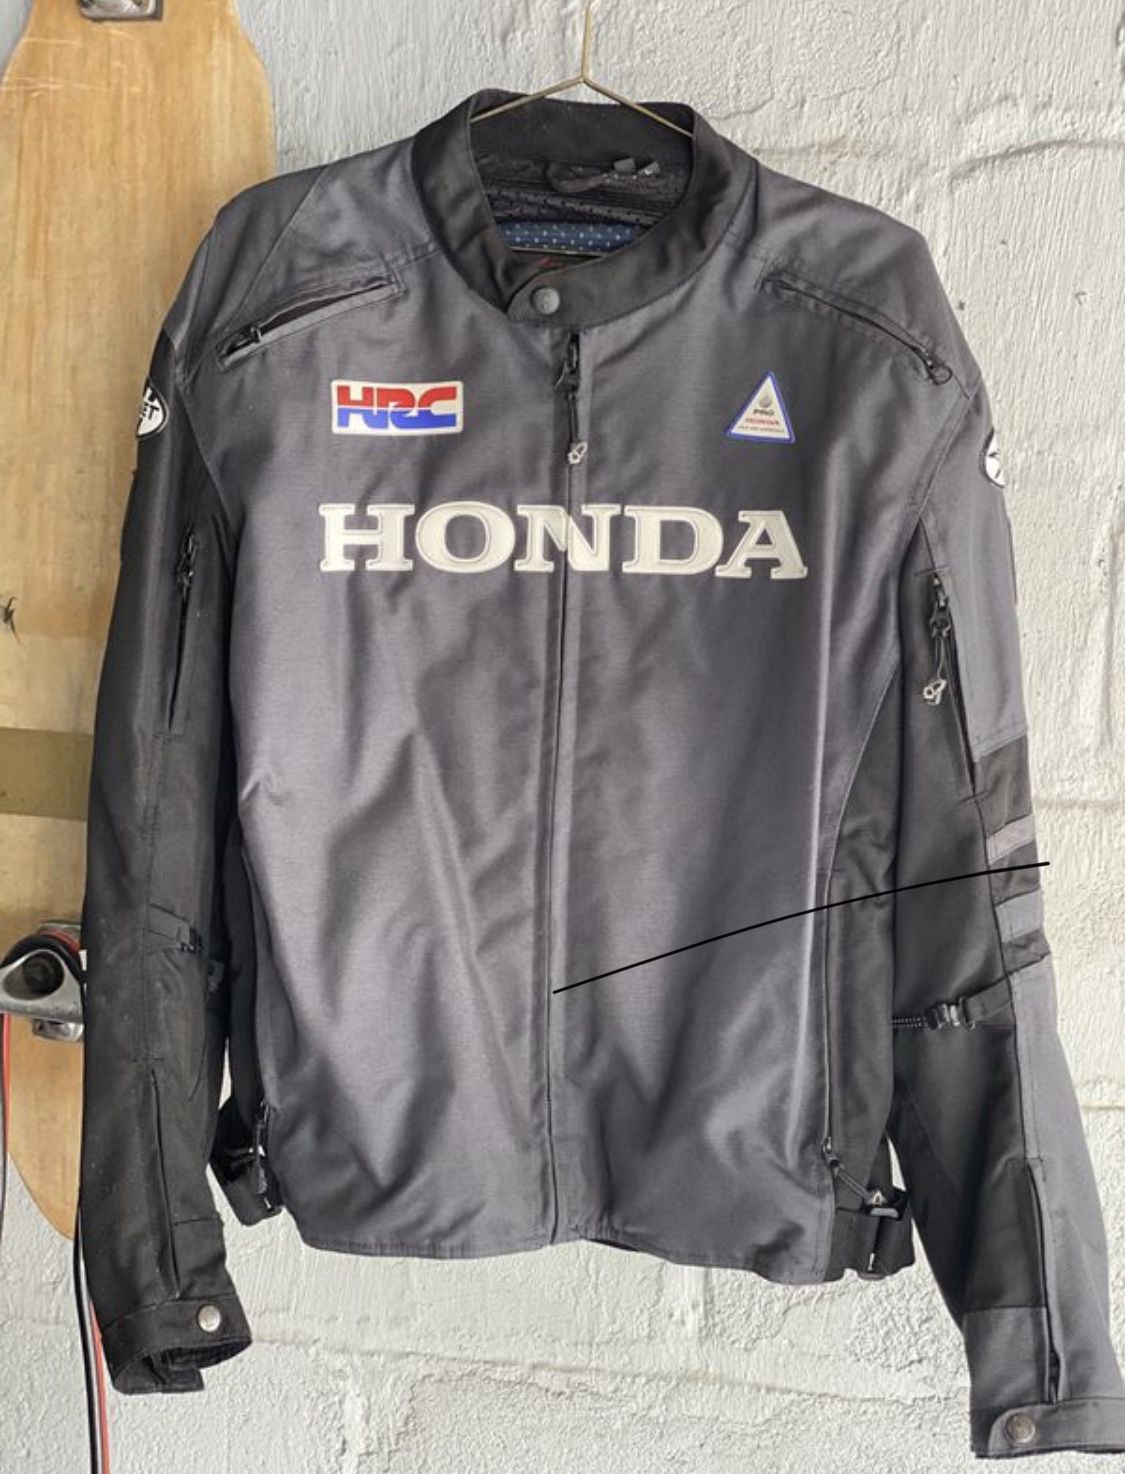 Honda motorcycle jacket